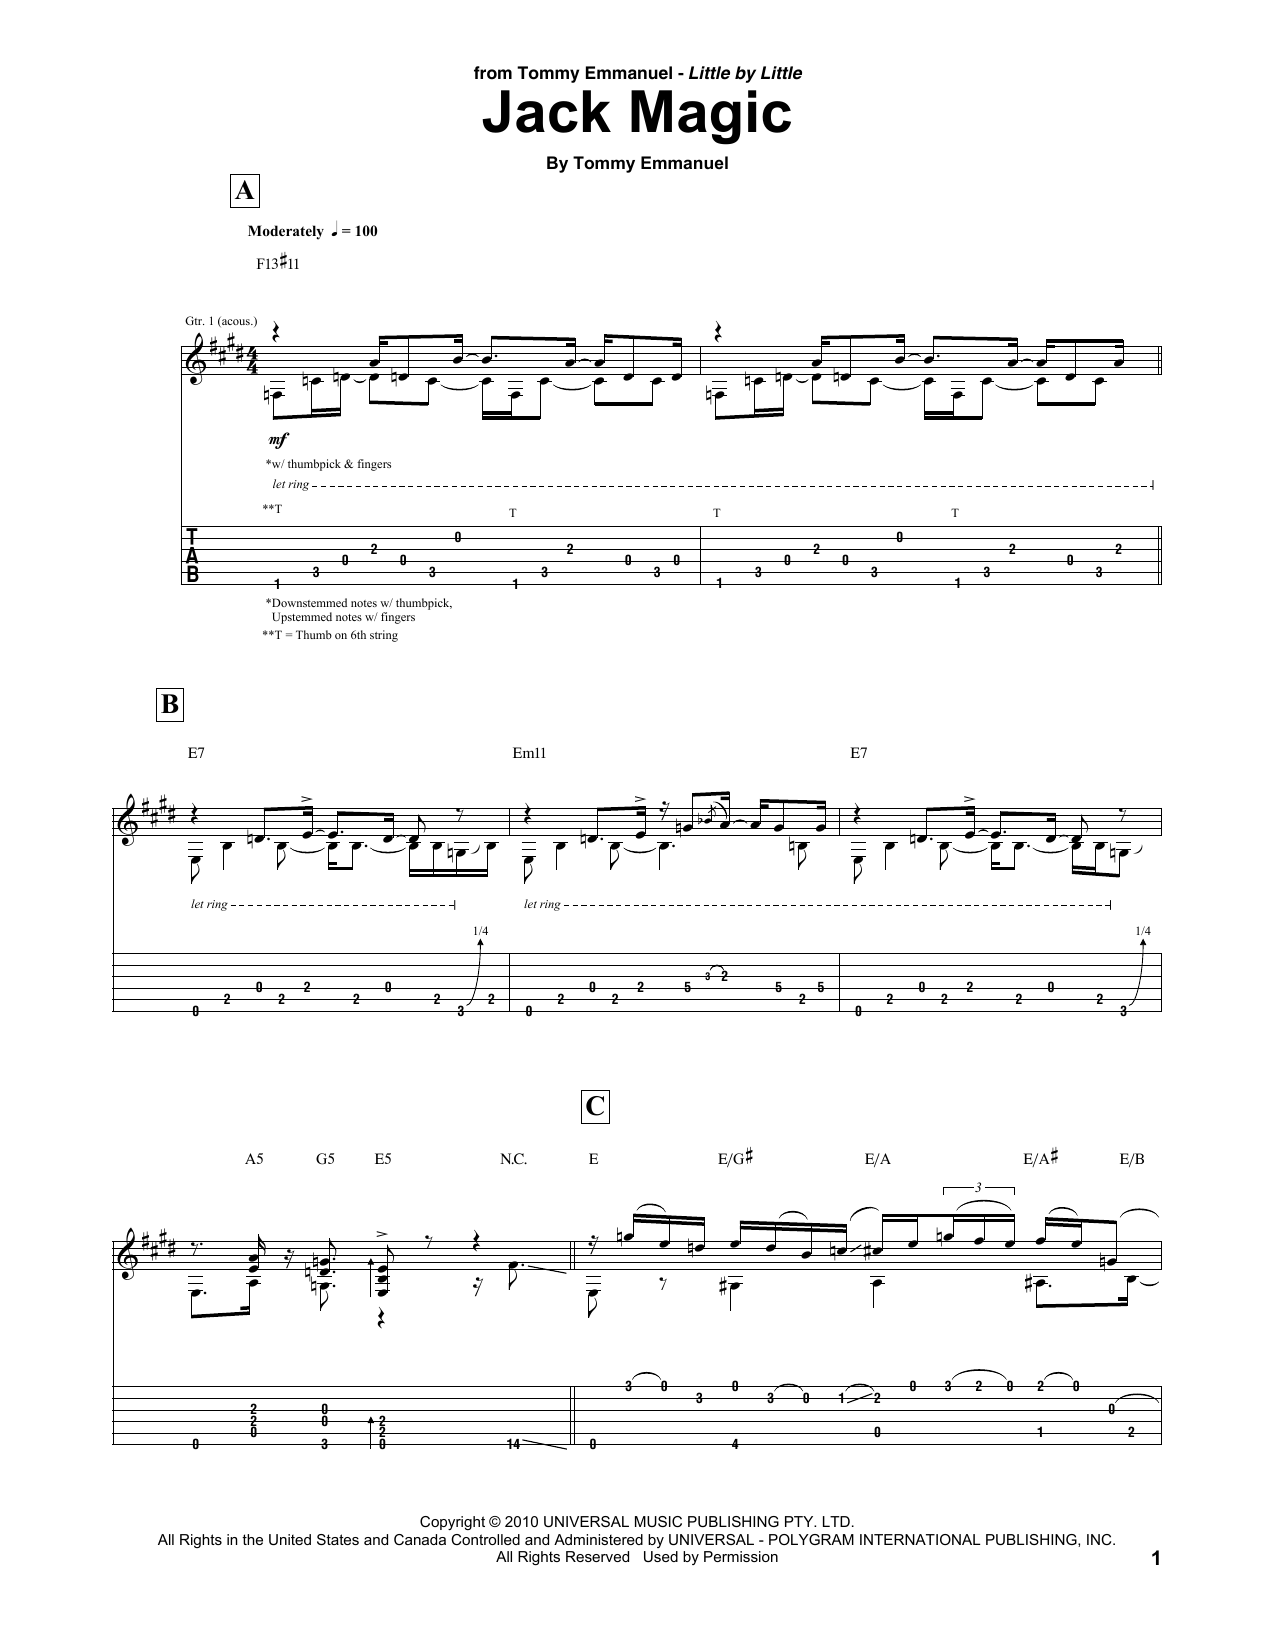 Tommy Emmanuel Jack Magic Sheet Music Notes & Chords for Guitar Tab - Download or Print PDF